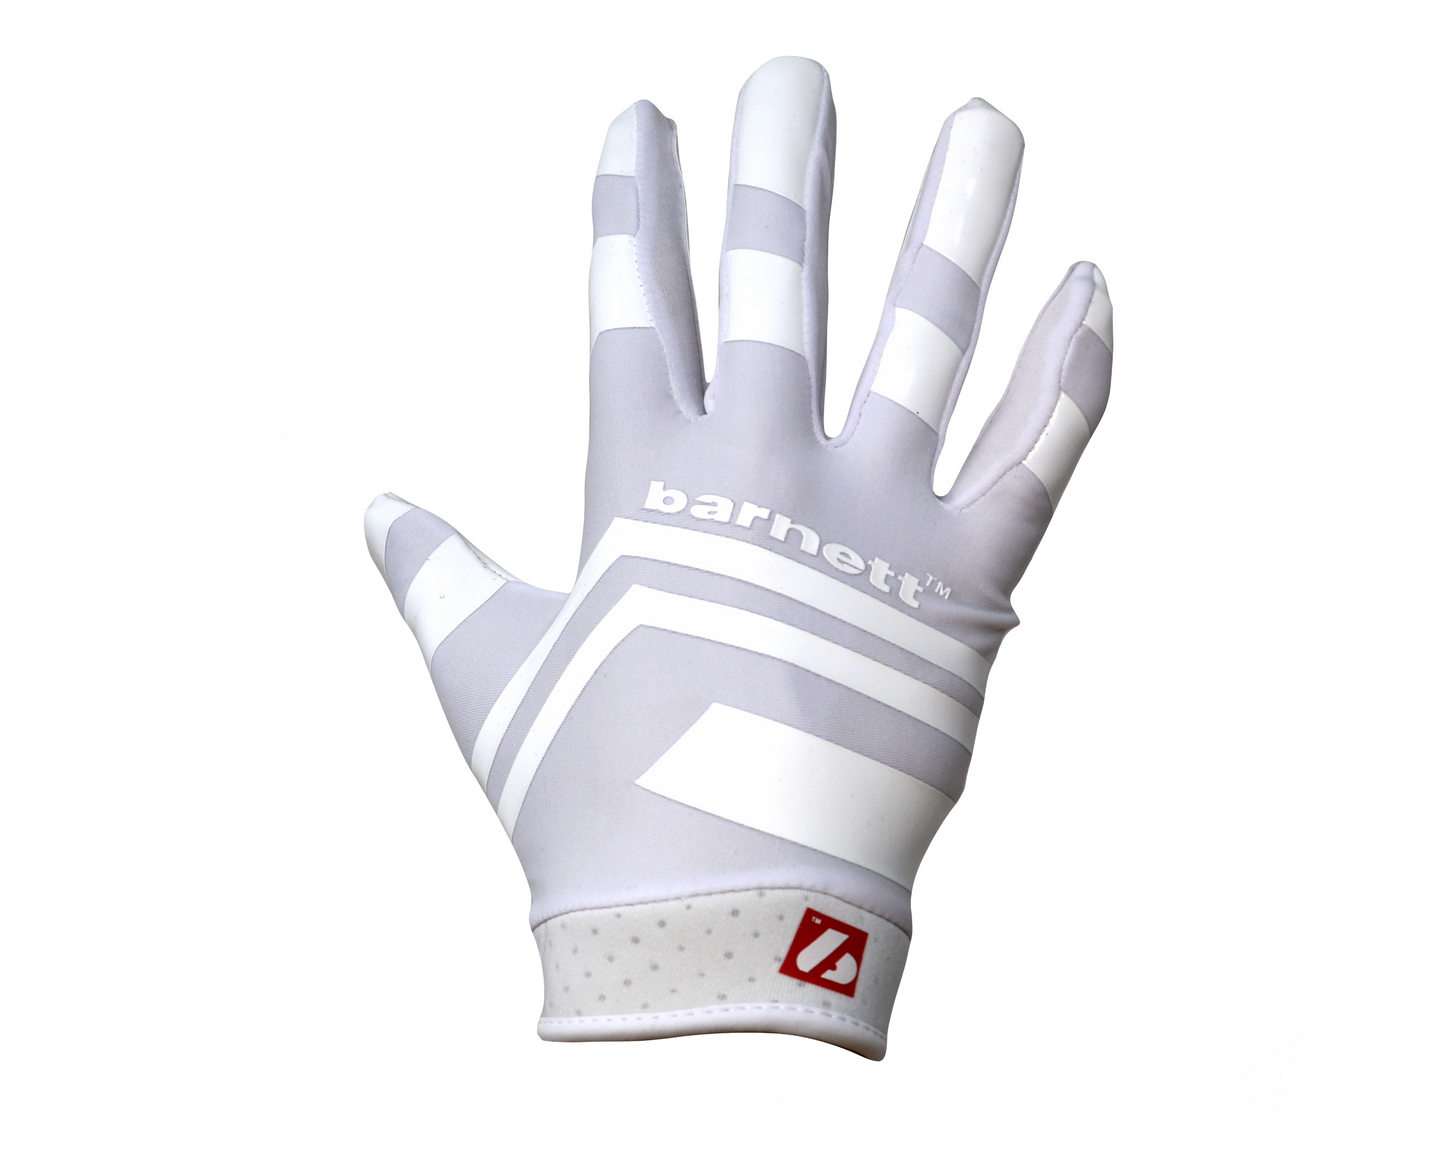 FRG-03 The best receiver football gloves, White